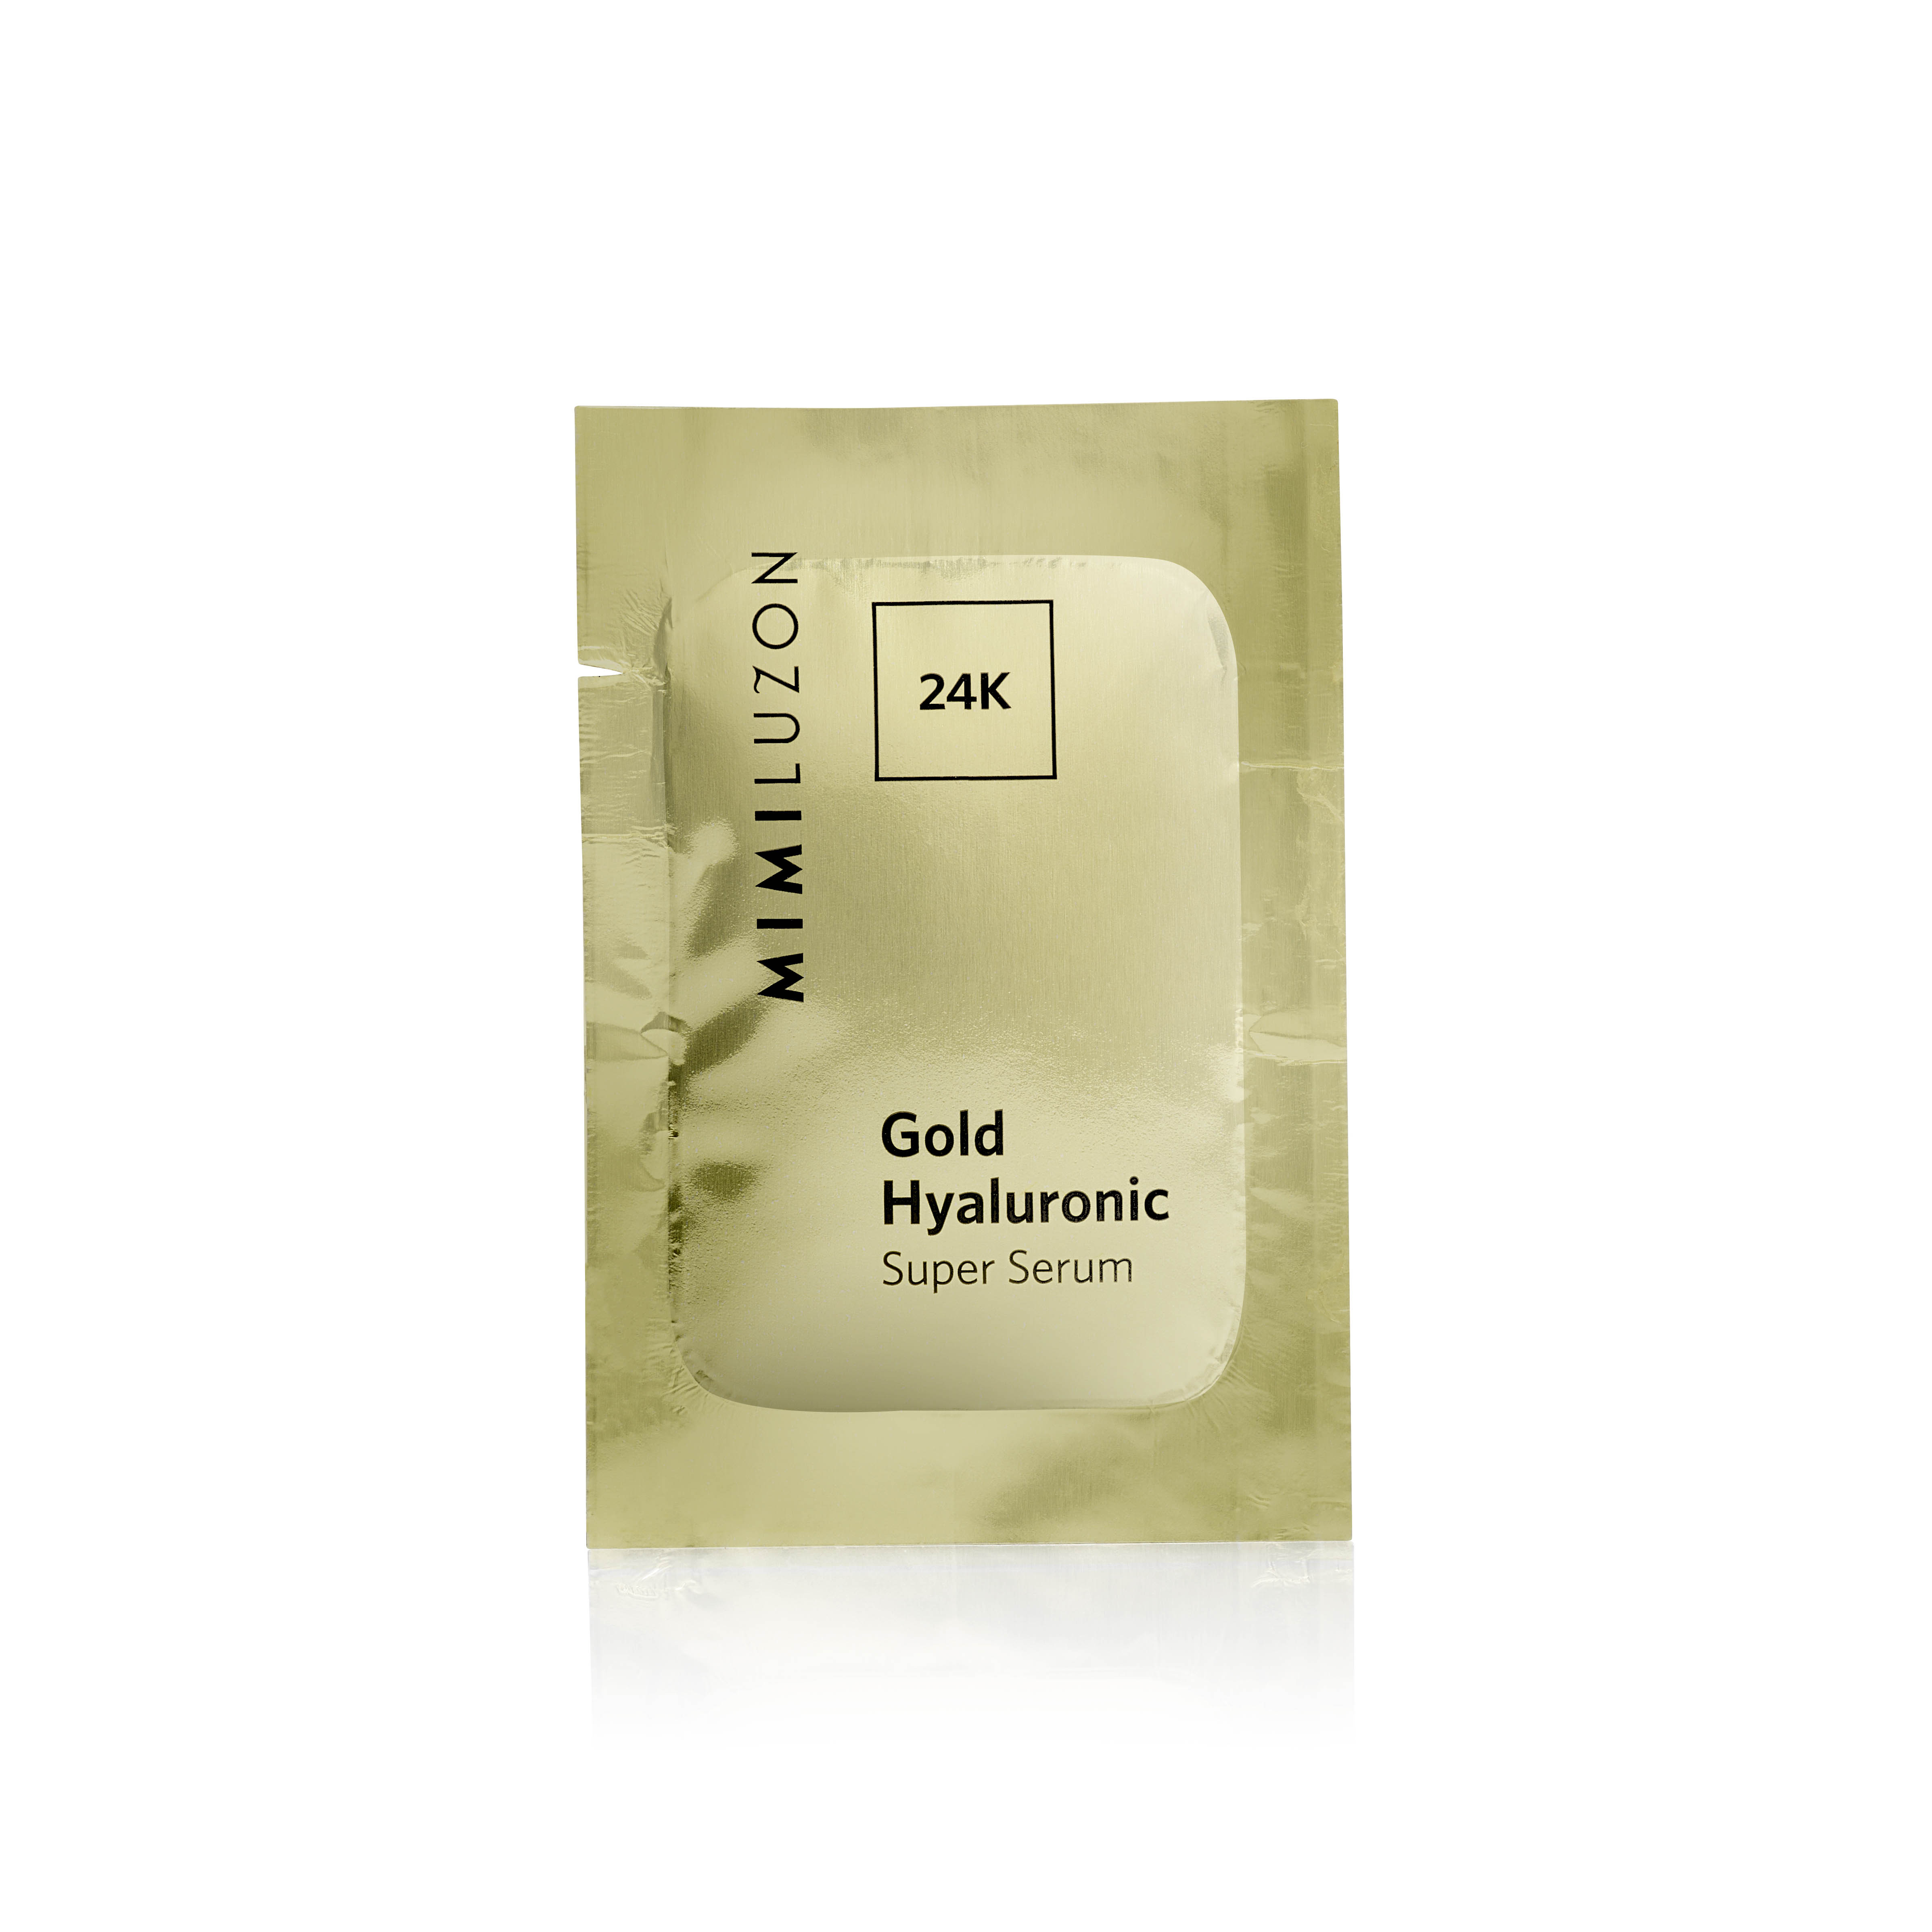 24K Pure Gold Hyaluronic Serum